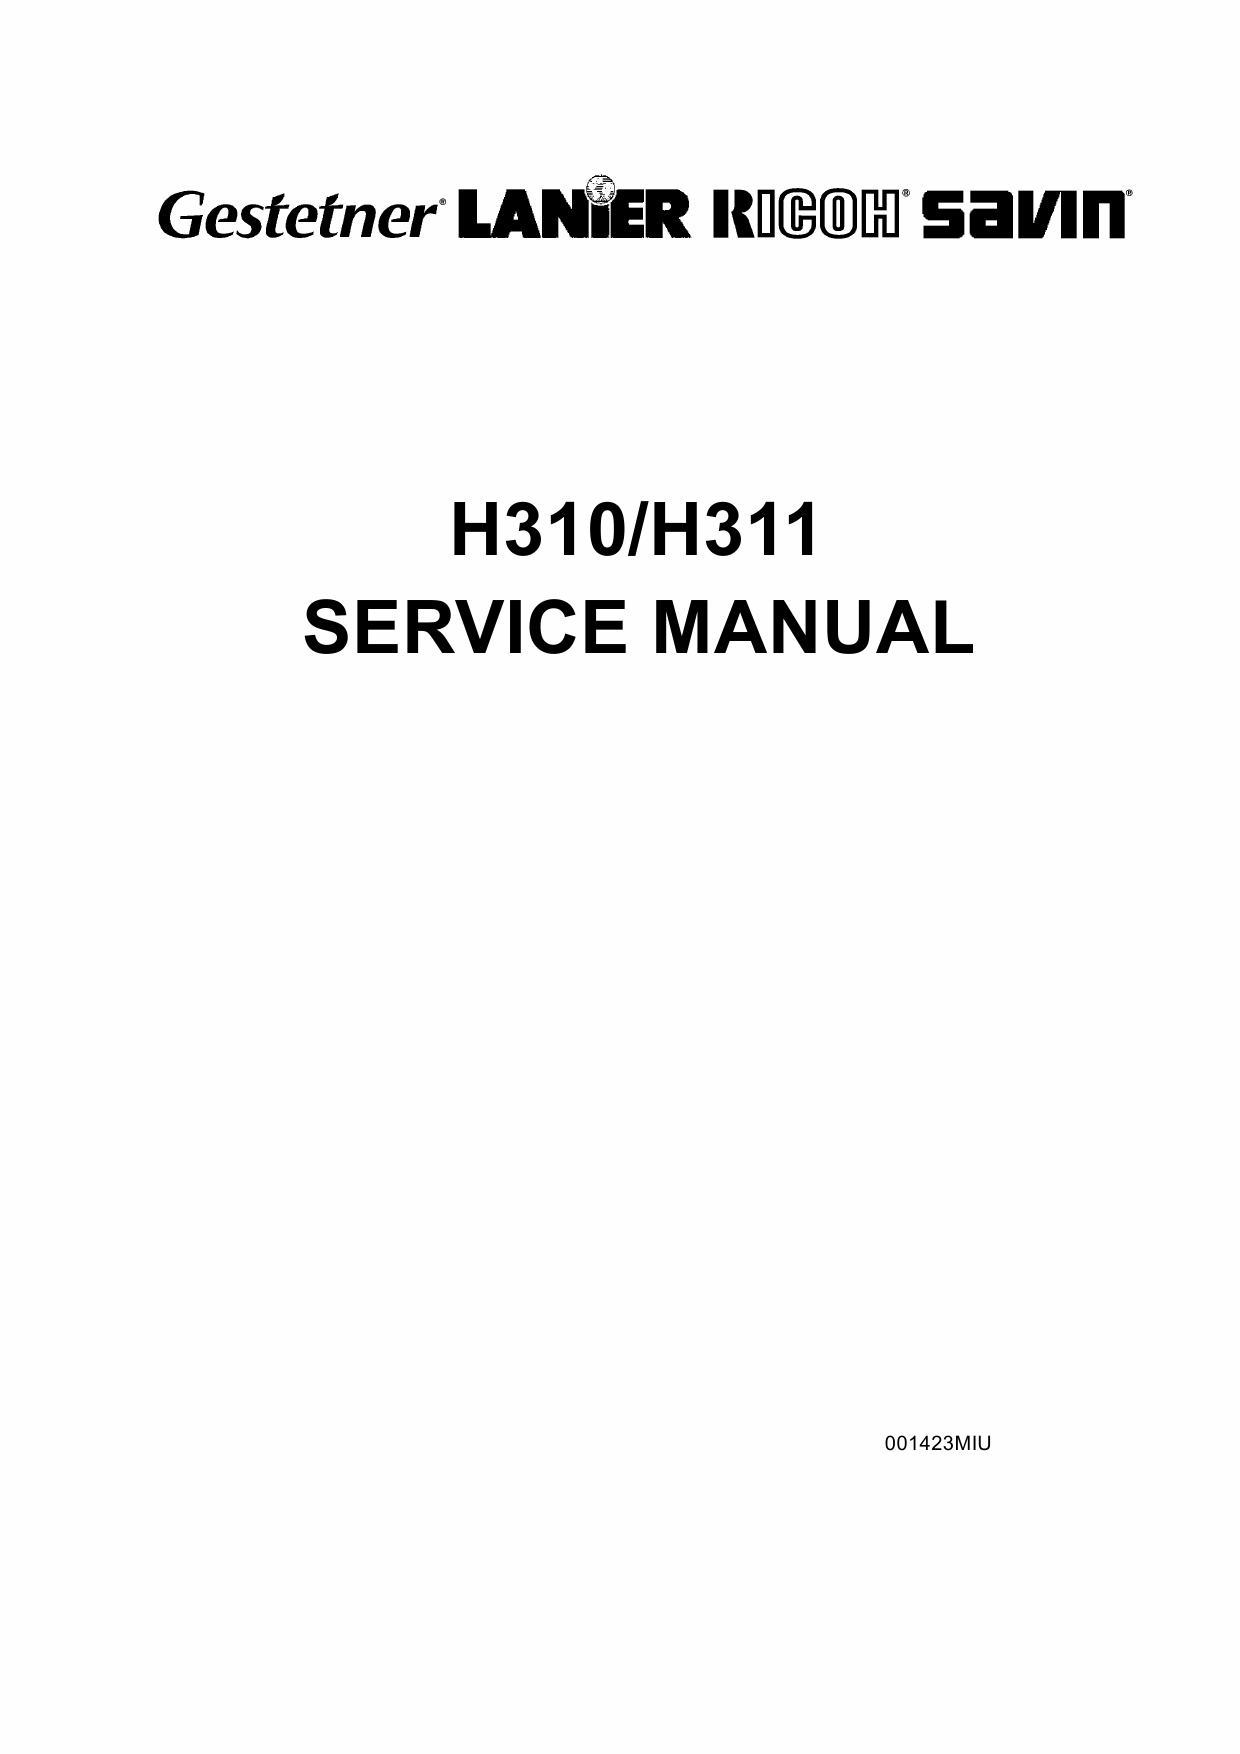 RICOH Fax 5510L 5510nf H310 H311 Service Manual-2